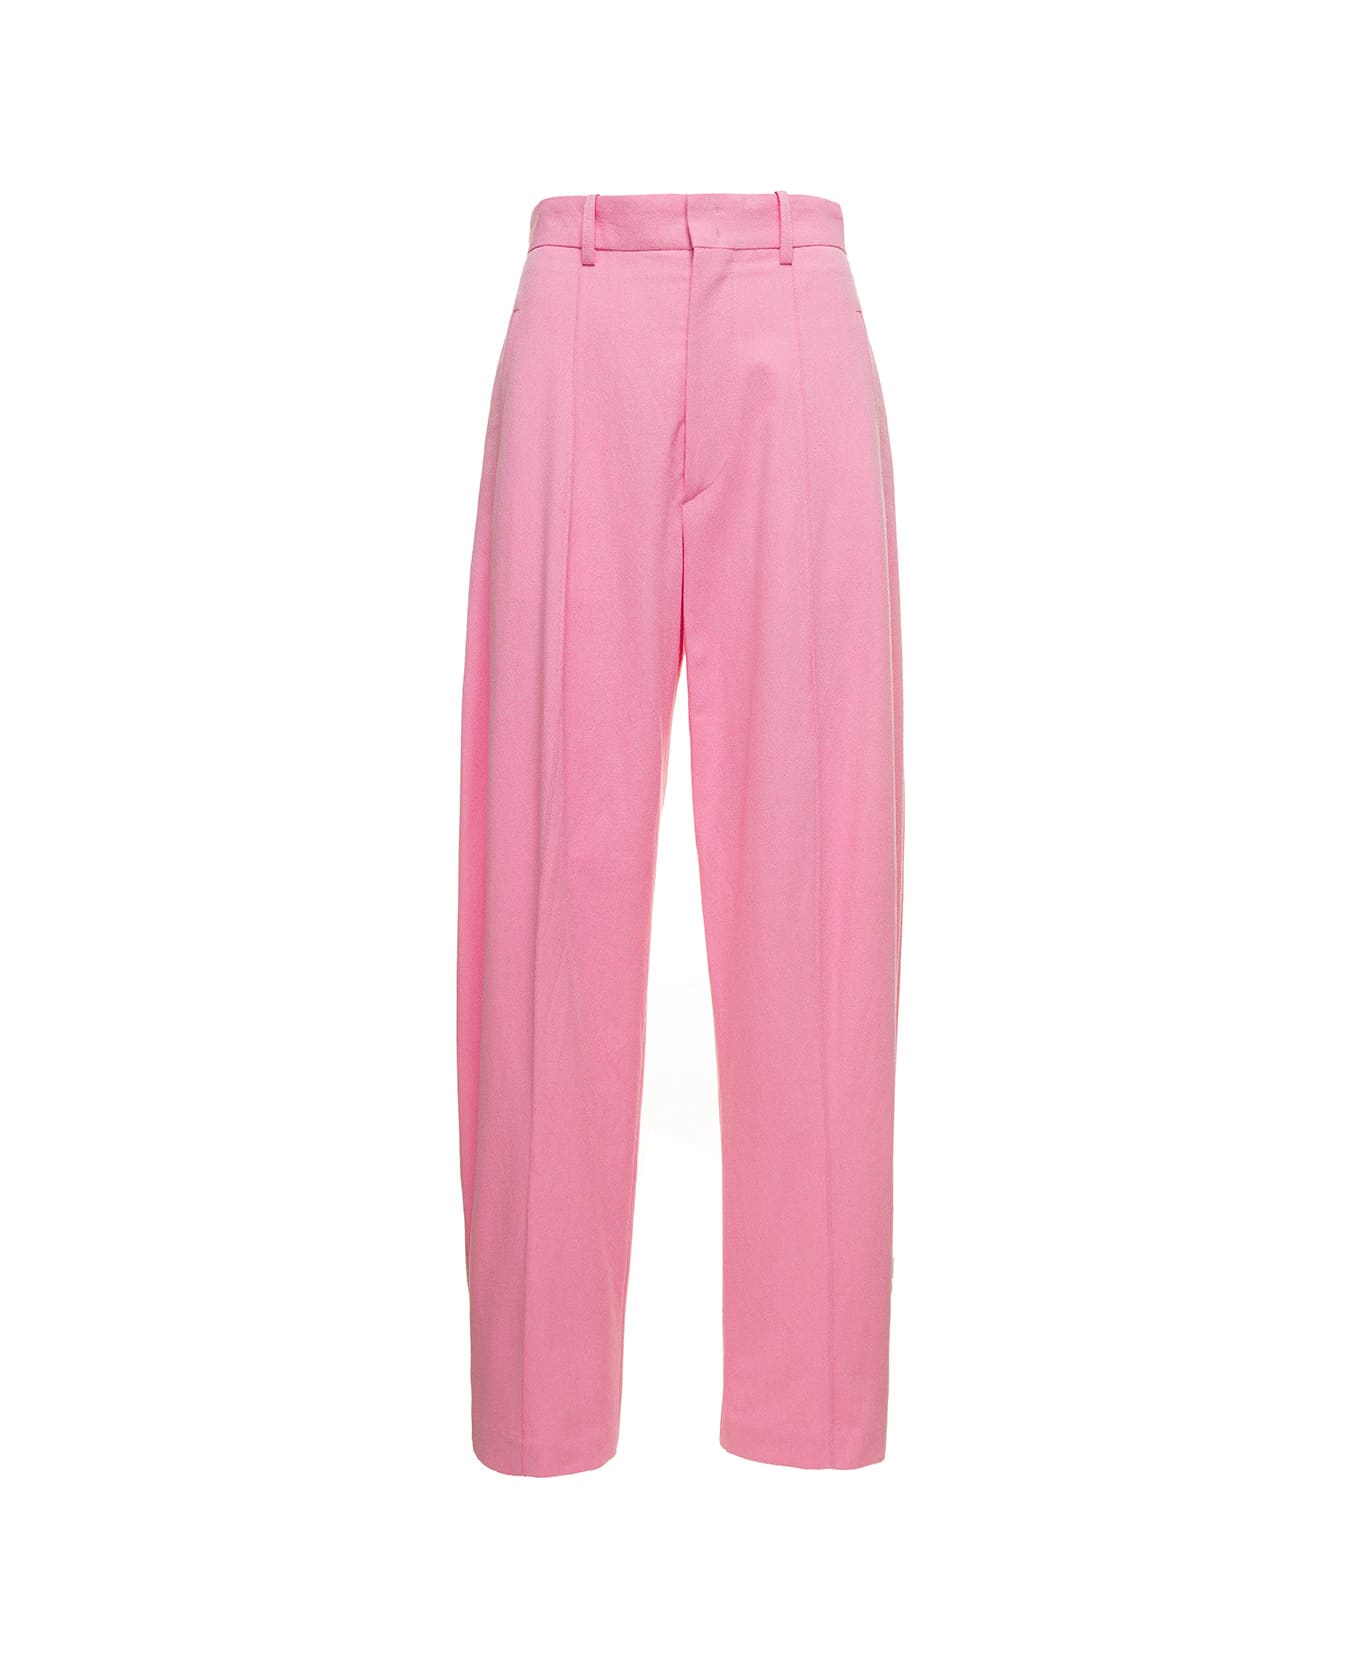 Isabel Marant 'sopiaeva' Baby Pink Palazzo Pants With Belt Loops In Viscose And Cotton Woman Isabel Marant - Pink